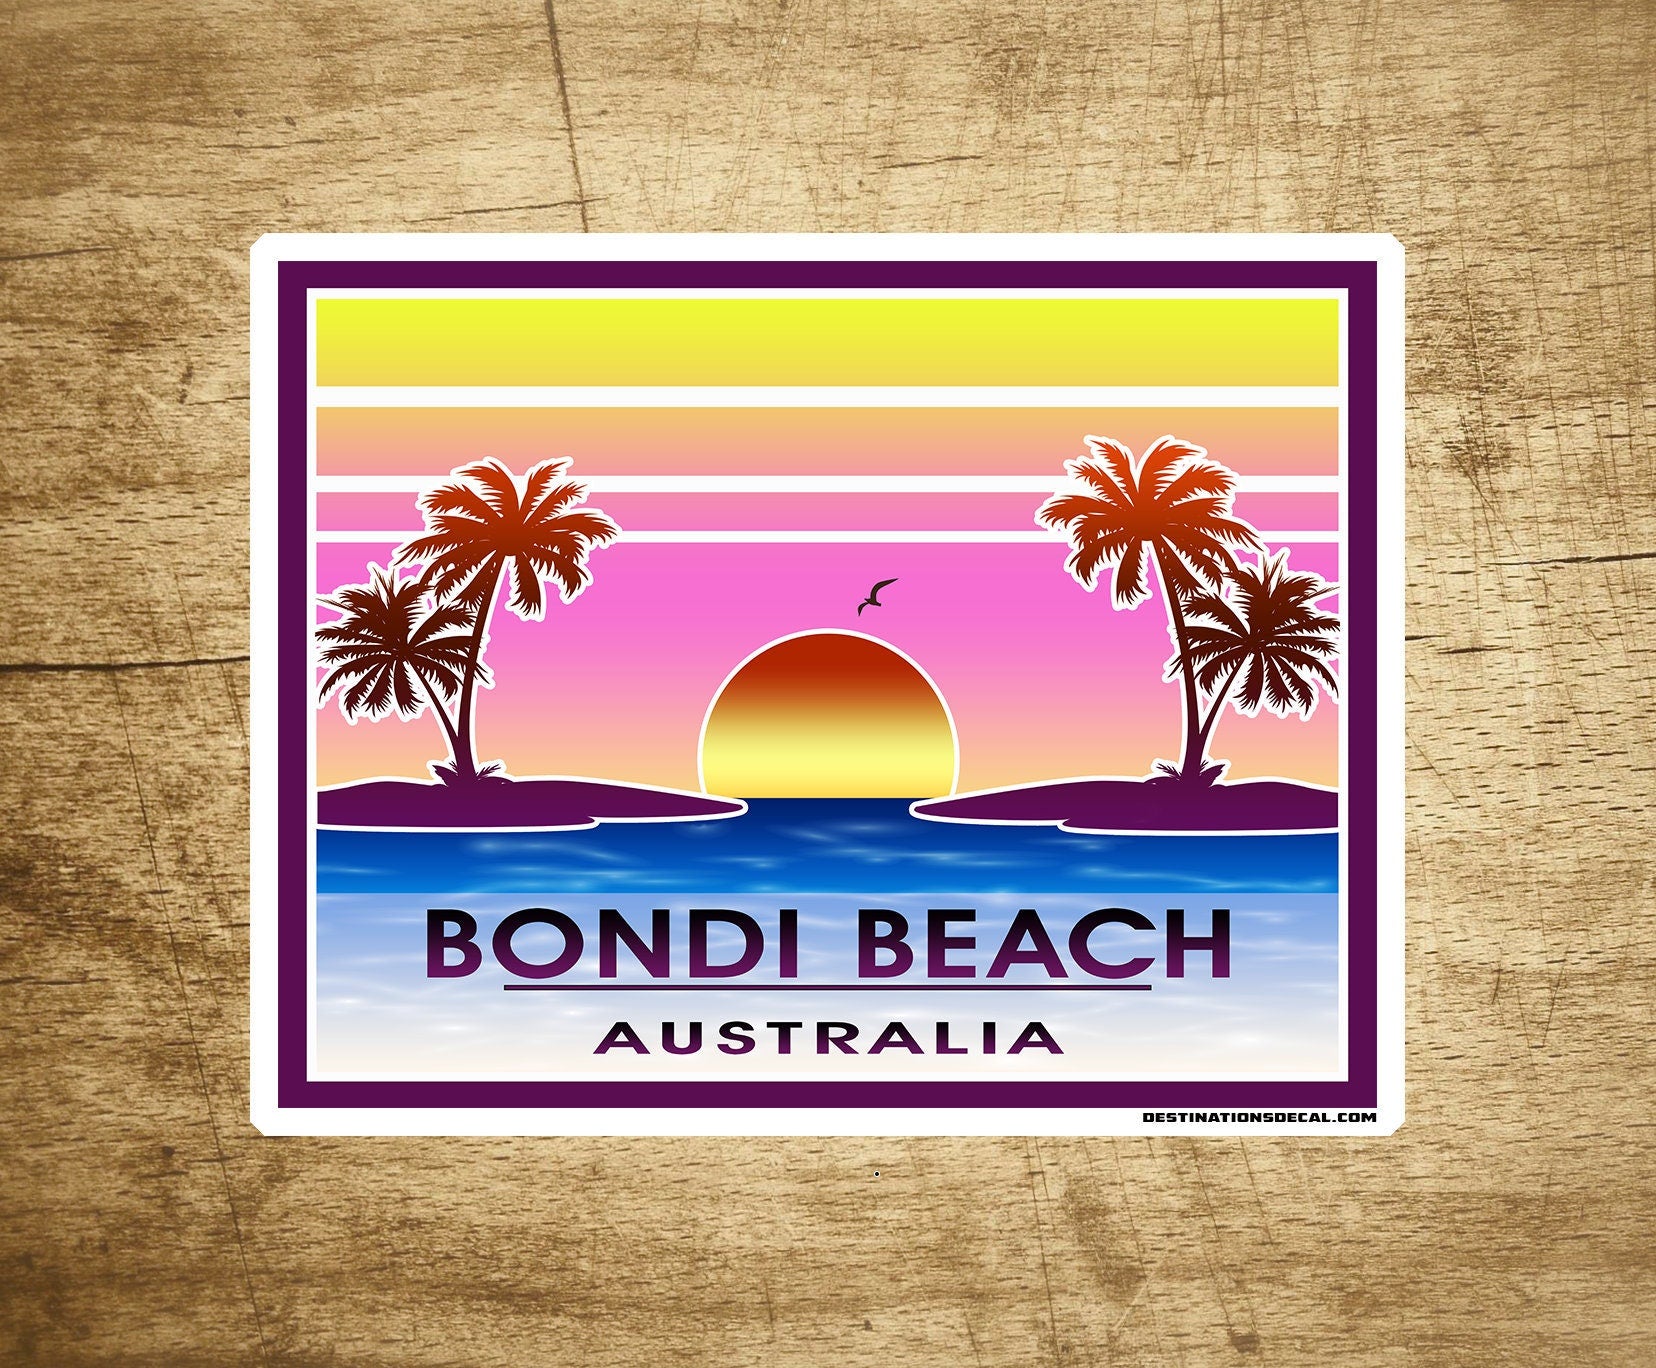 Bondi Beach Australia Decal Sticker 3.5" x 2.75" Tropical Beach New South Wales